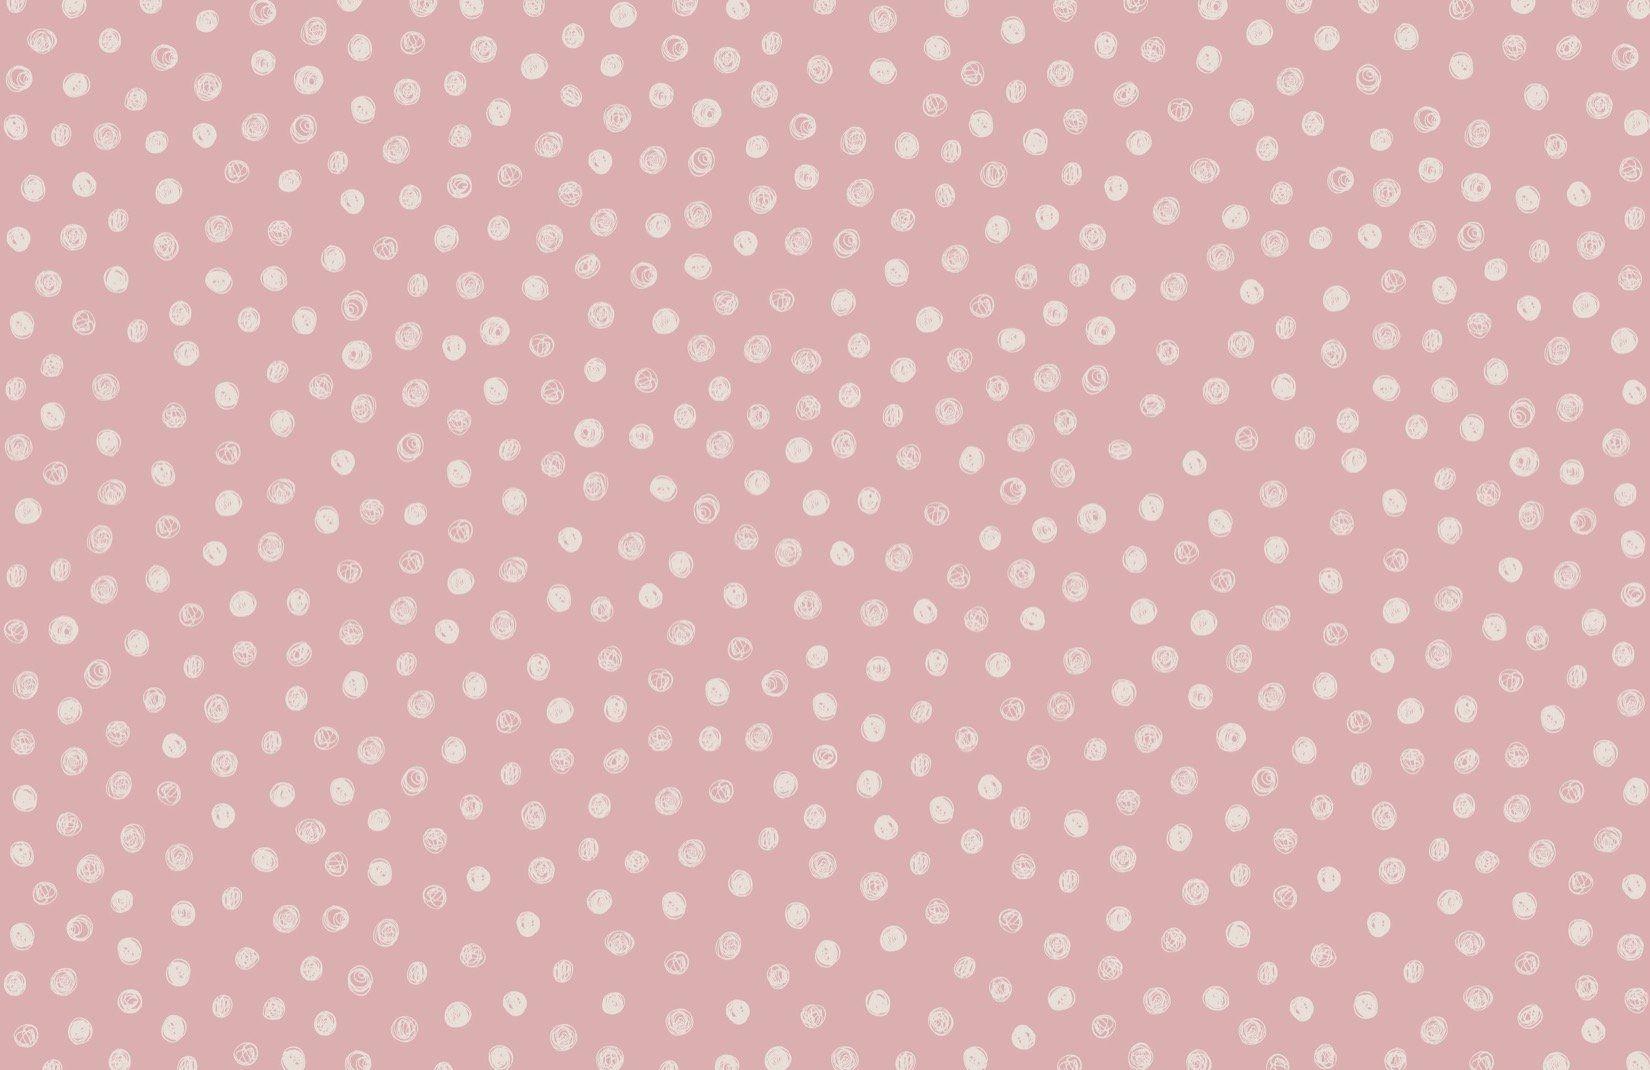 8. Light Pink and Polka Dot Nail Design on Tumblr - wide 2